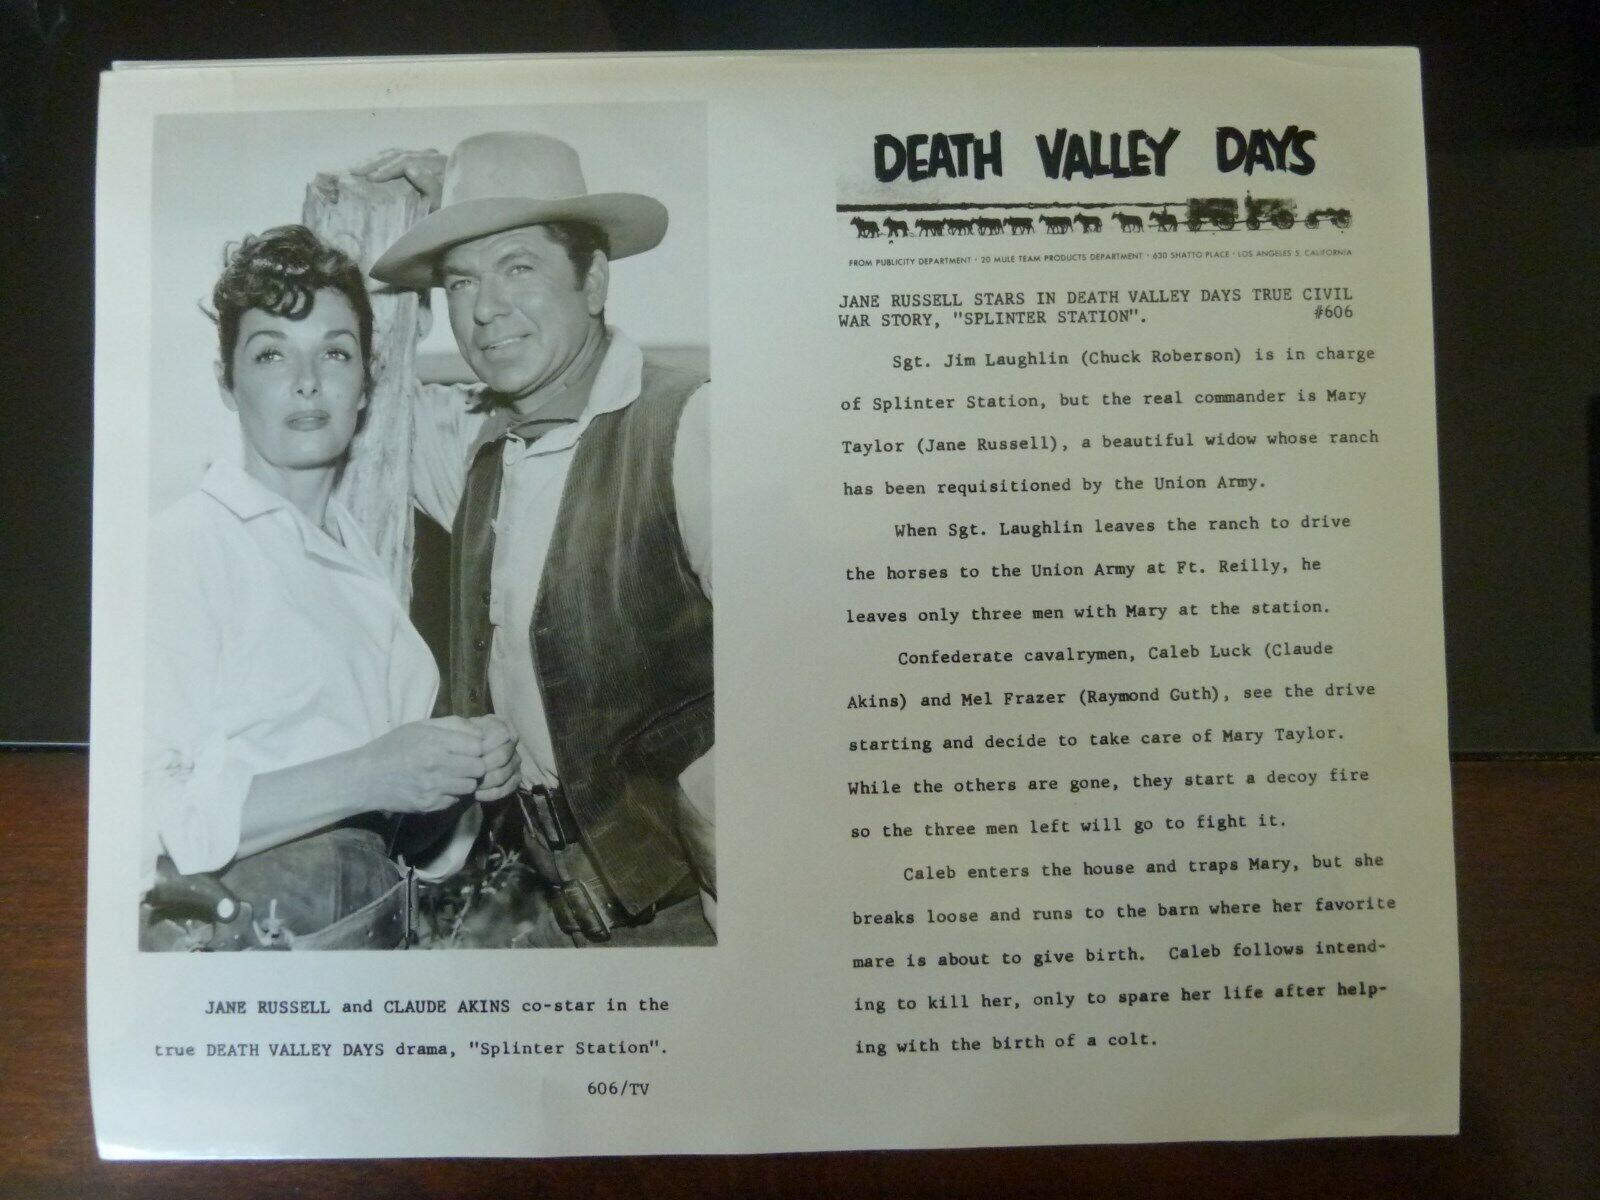 1960 Press Photo Jane Russell /claude Akins "death Valley Days" Season 9 #606/tv